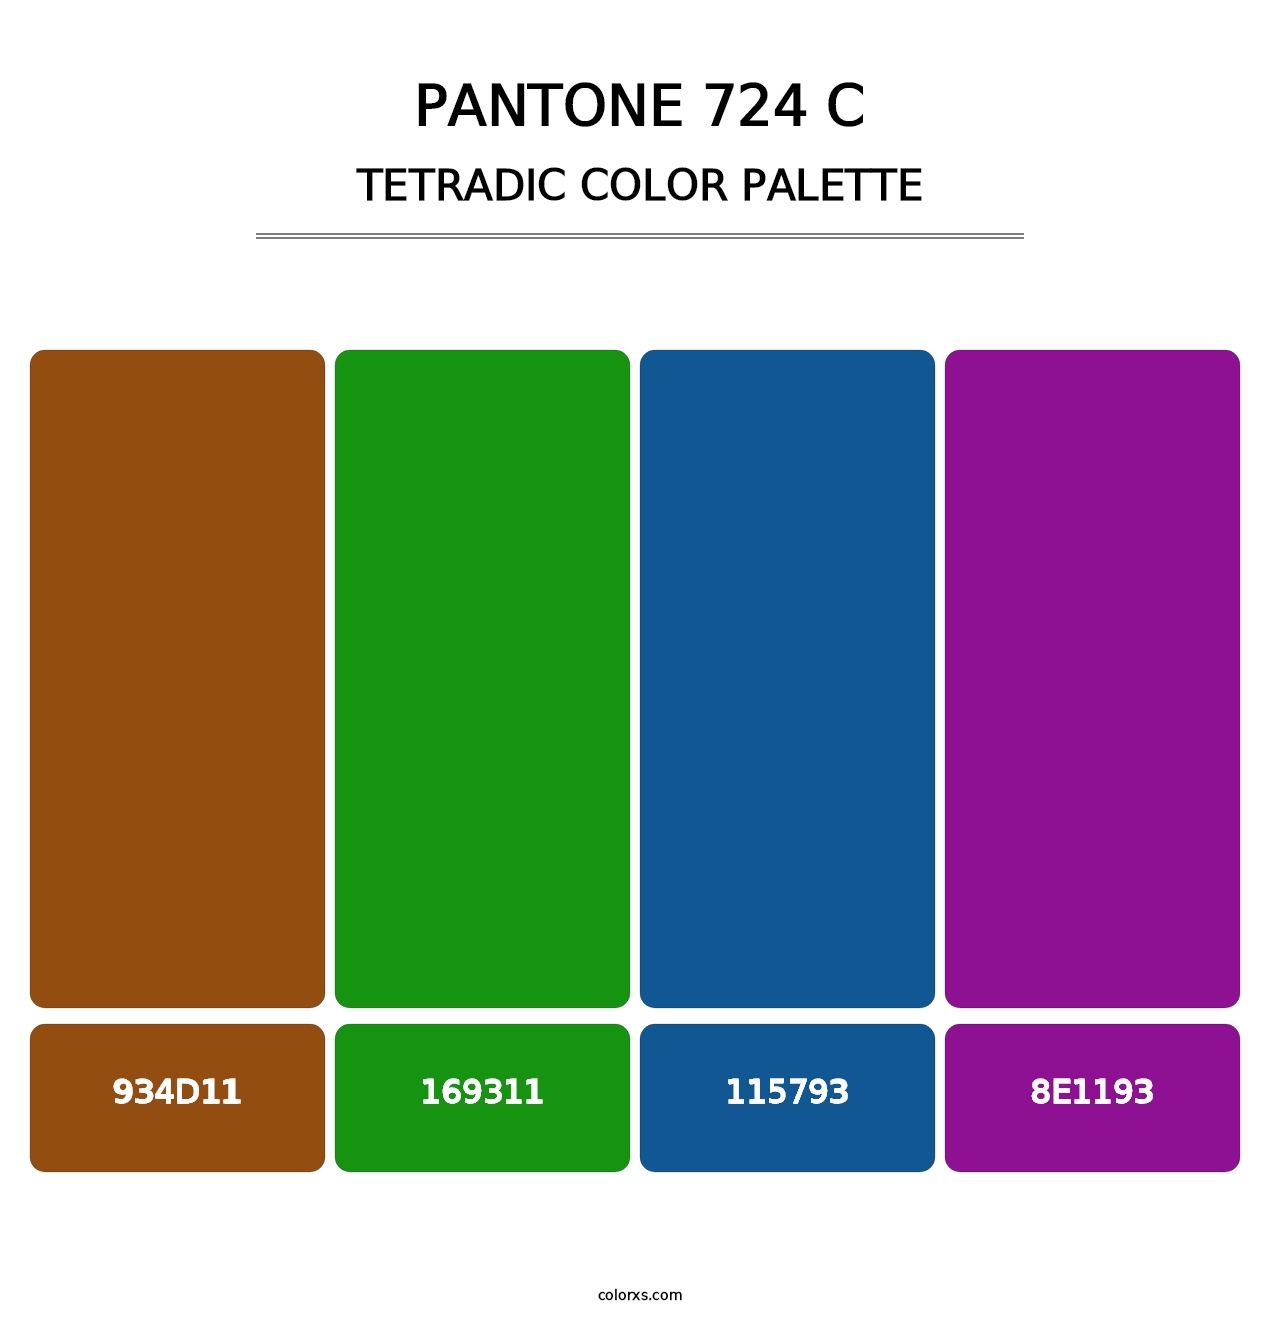 PANTONE 724 C - Tetradic Color Palette